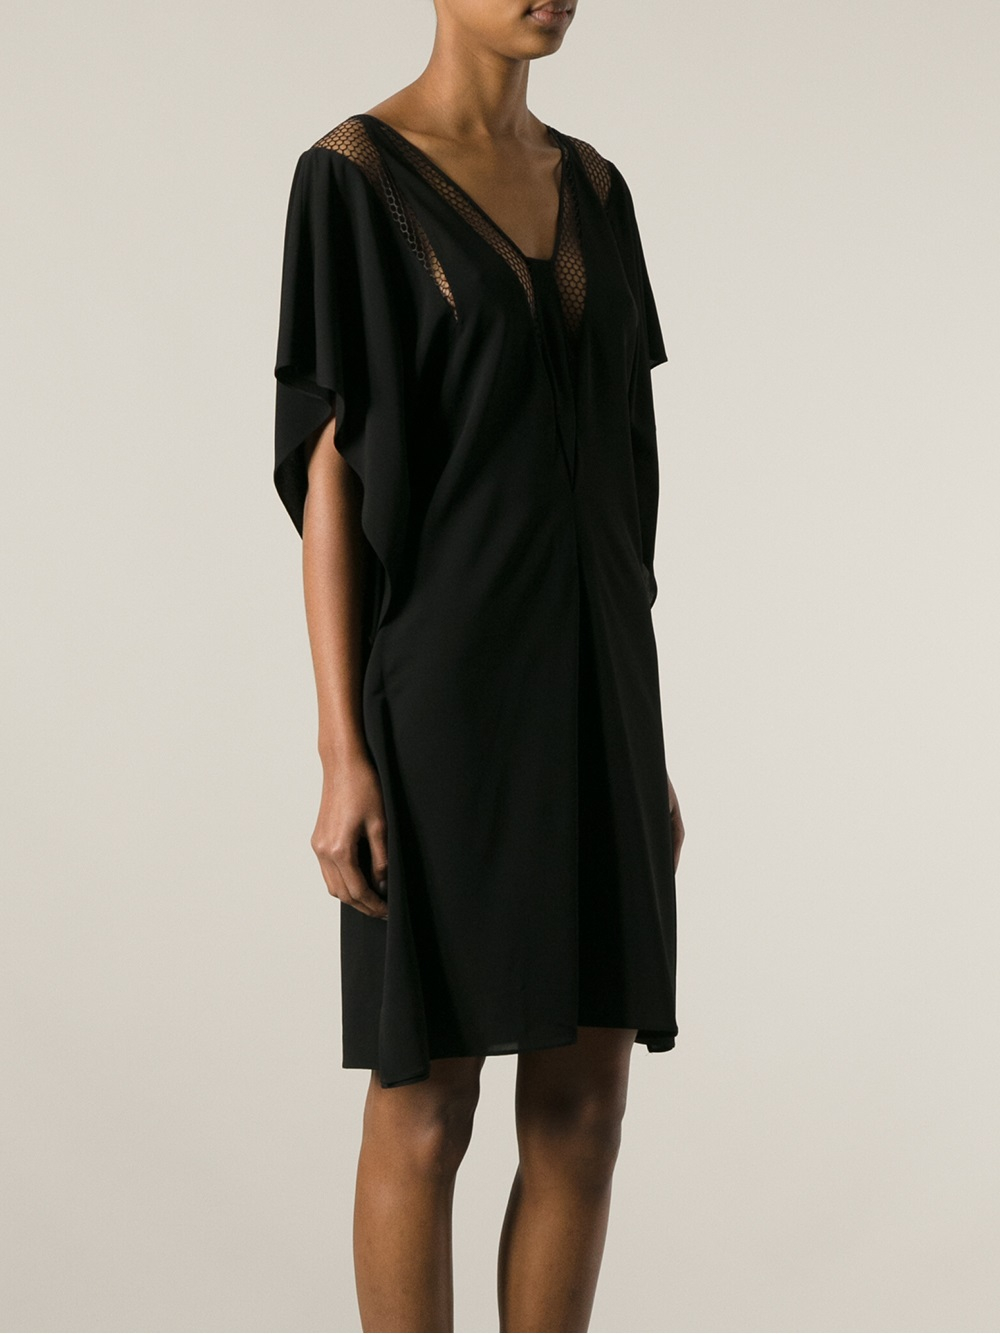 Lyst - Vionnet Mesh Detail Dress in Black